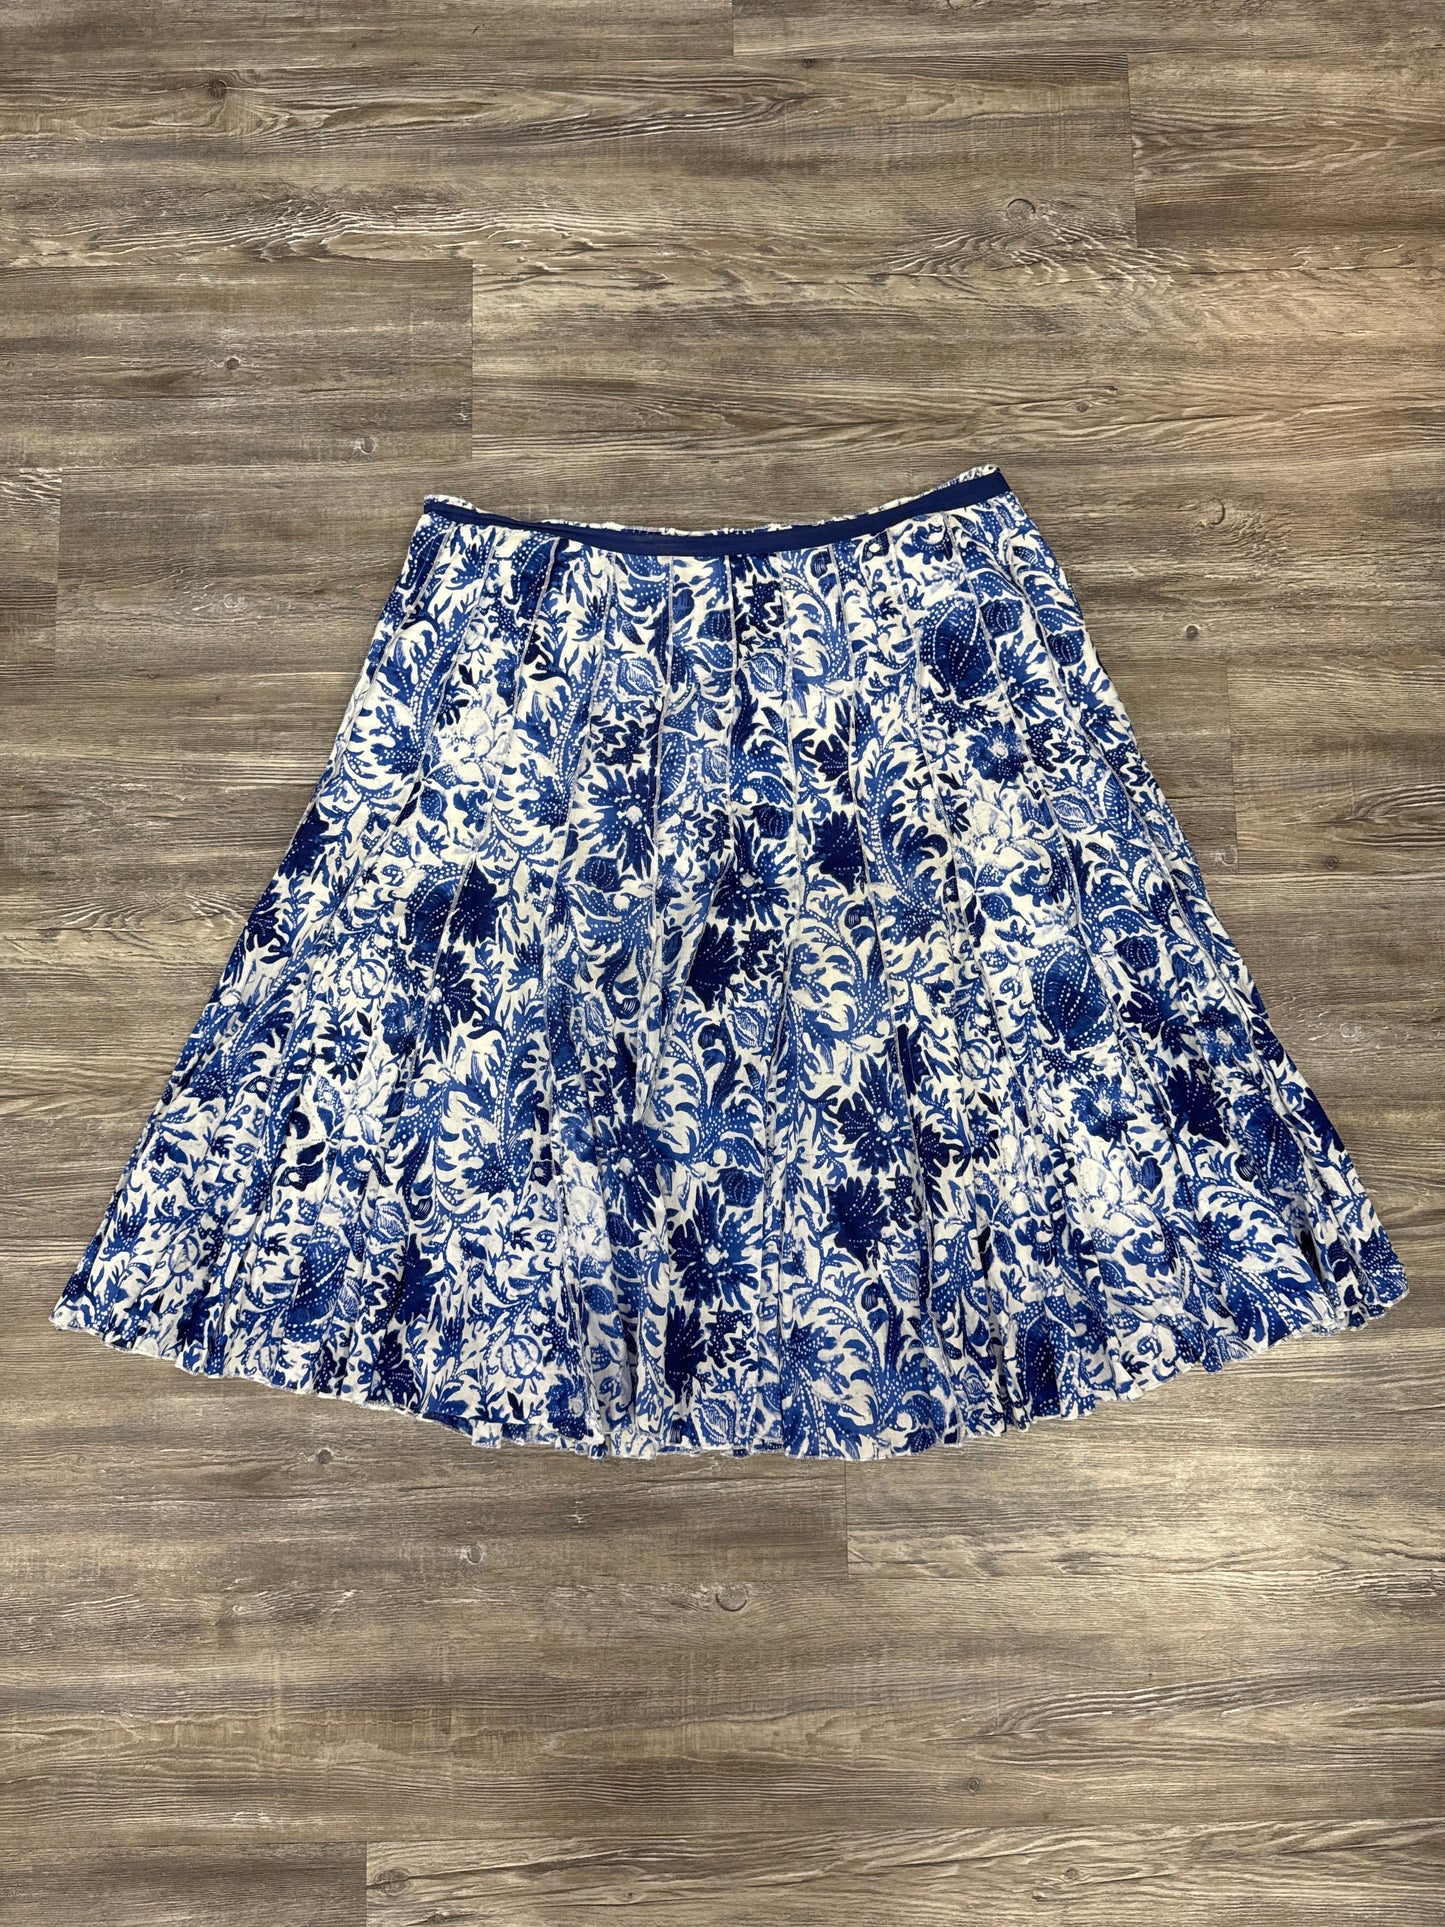 Blue & White Skirt Midi Dressbarn, Size 16